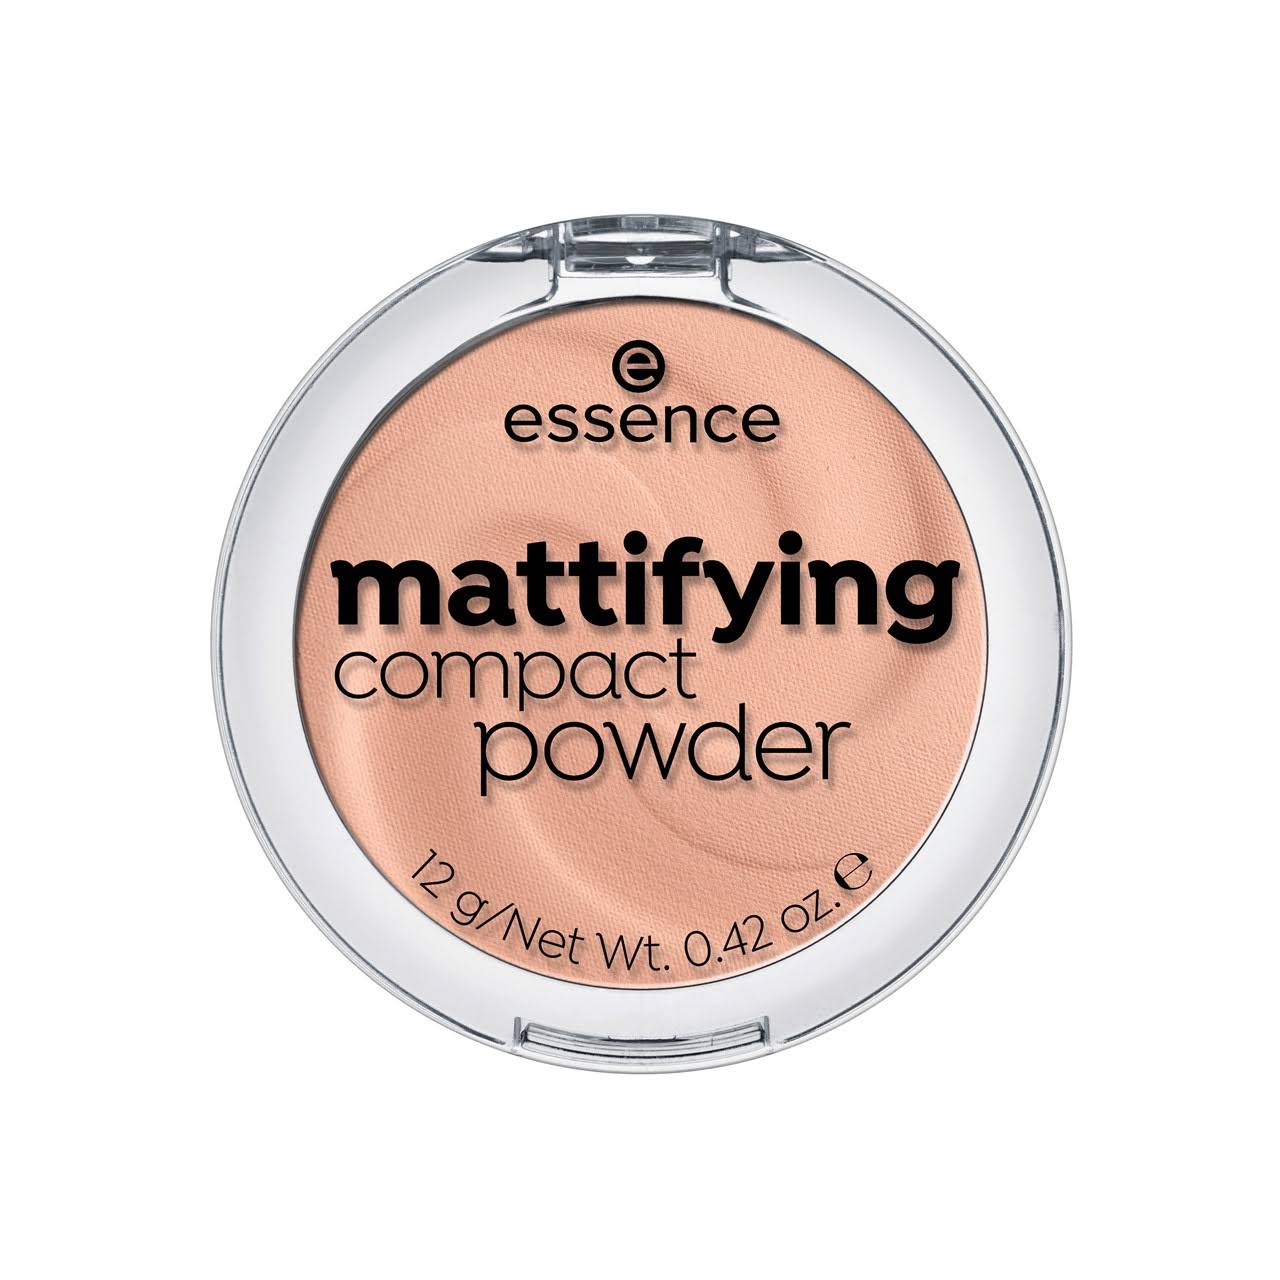 Essence Mattifying Compact Powder - #04 Perfect Beige, 12 g